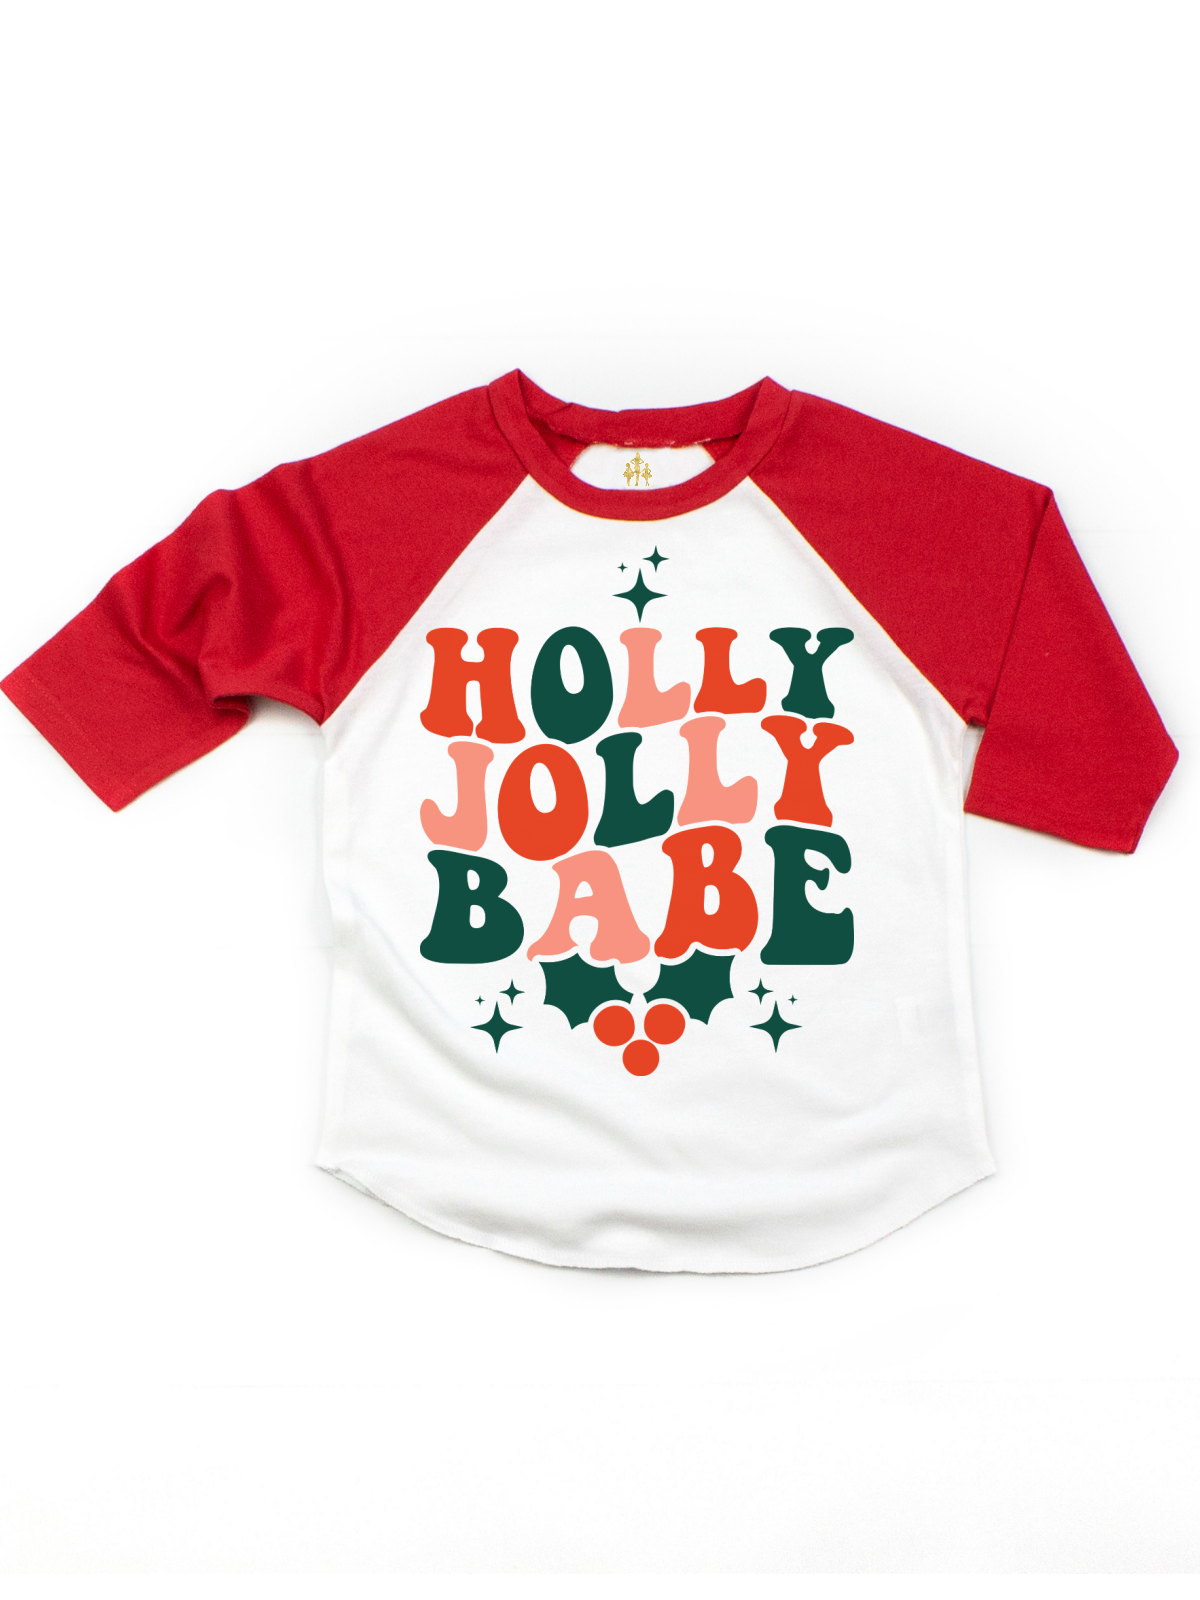 Holly Jolly Babe Kids Mistletoe Christmas Shirt